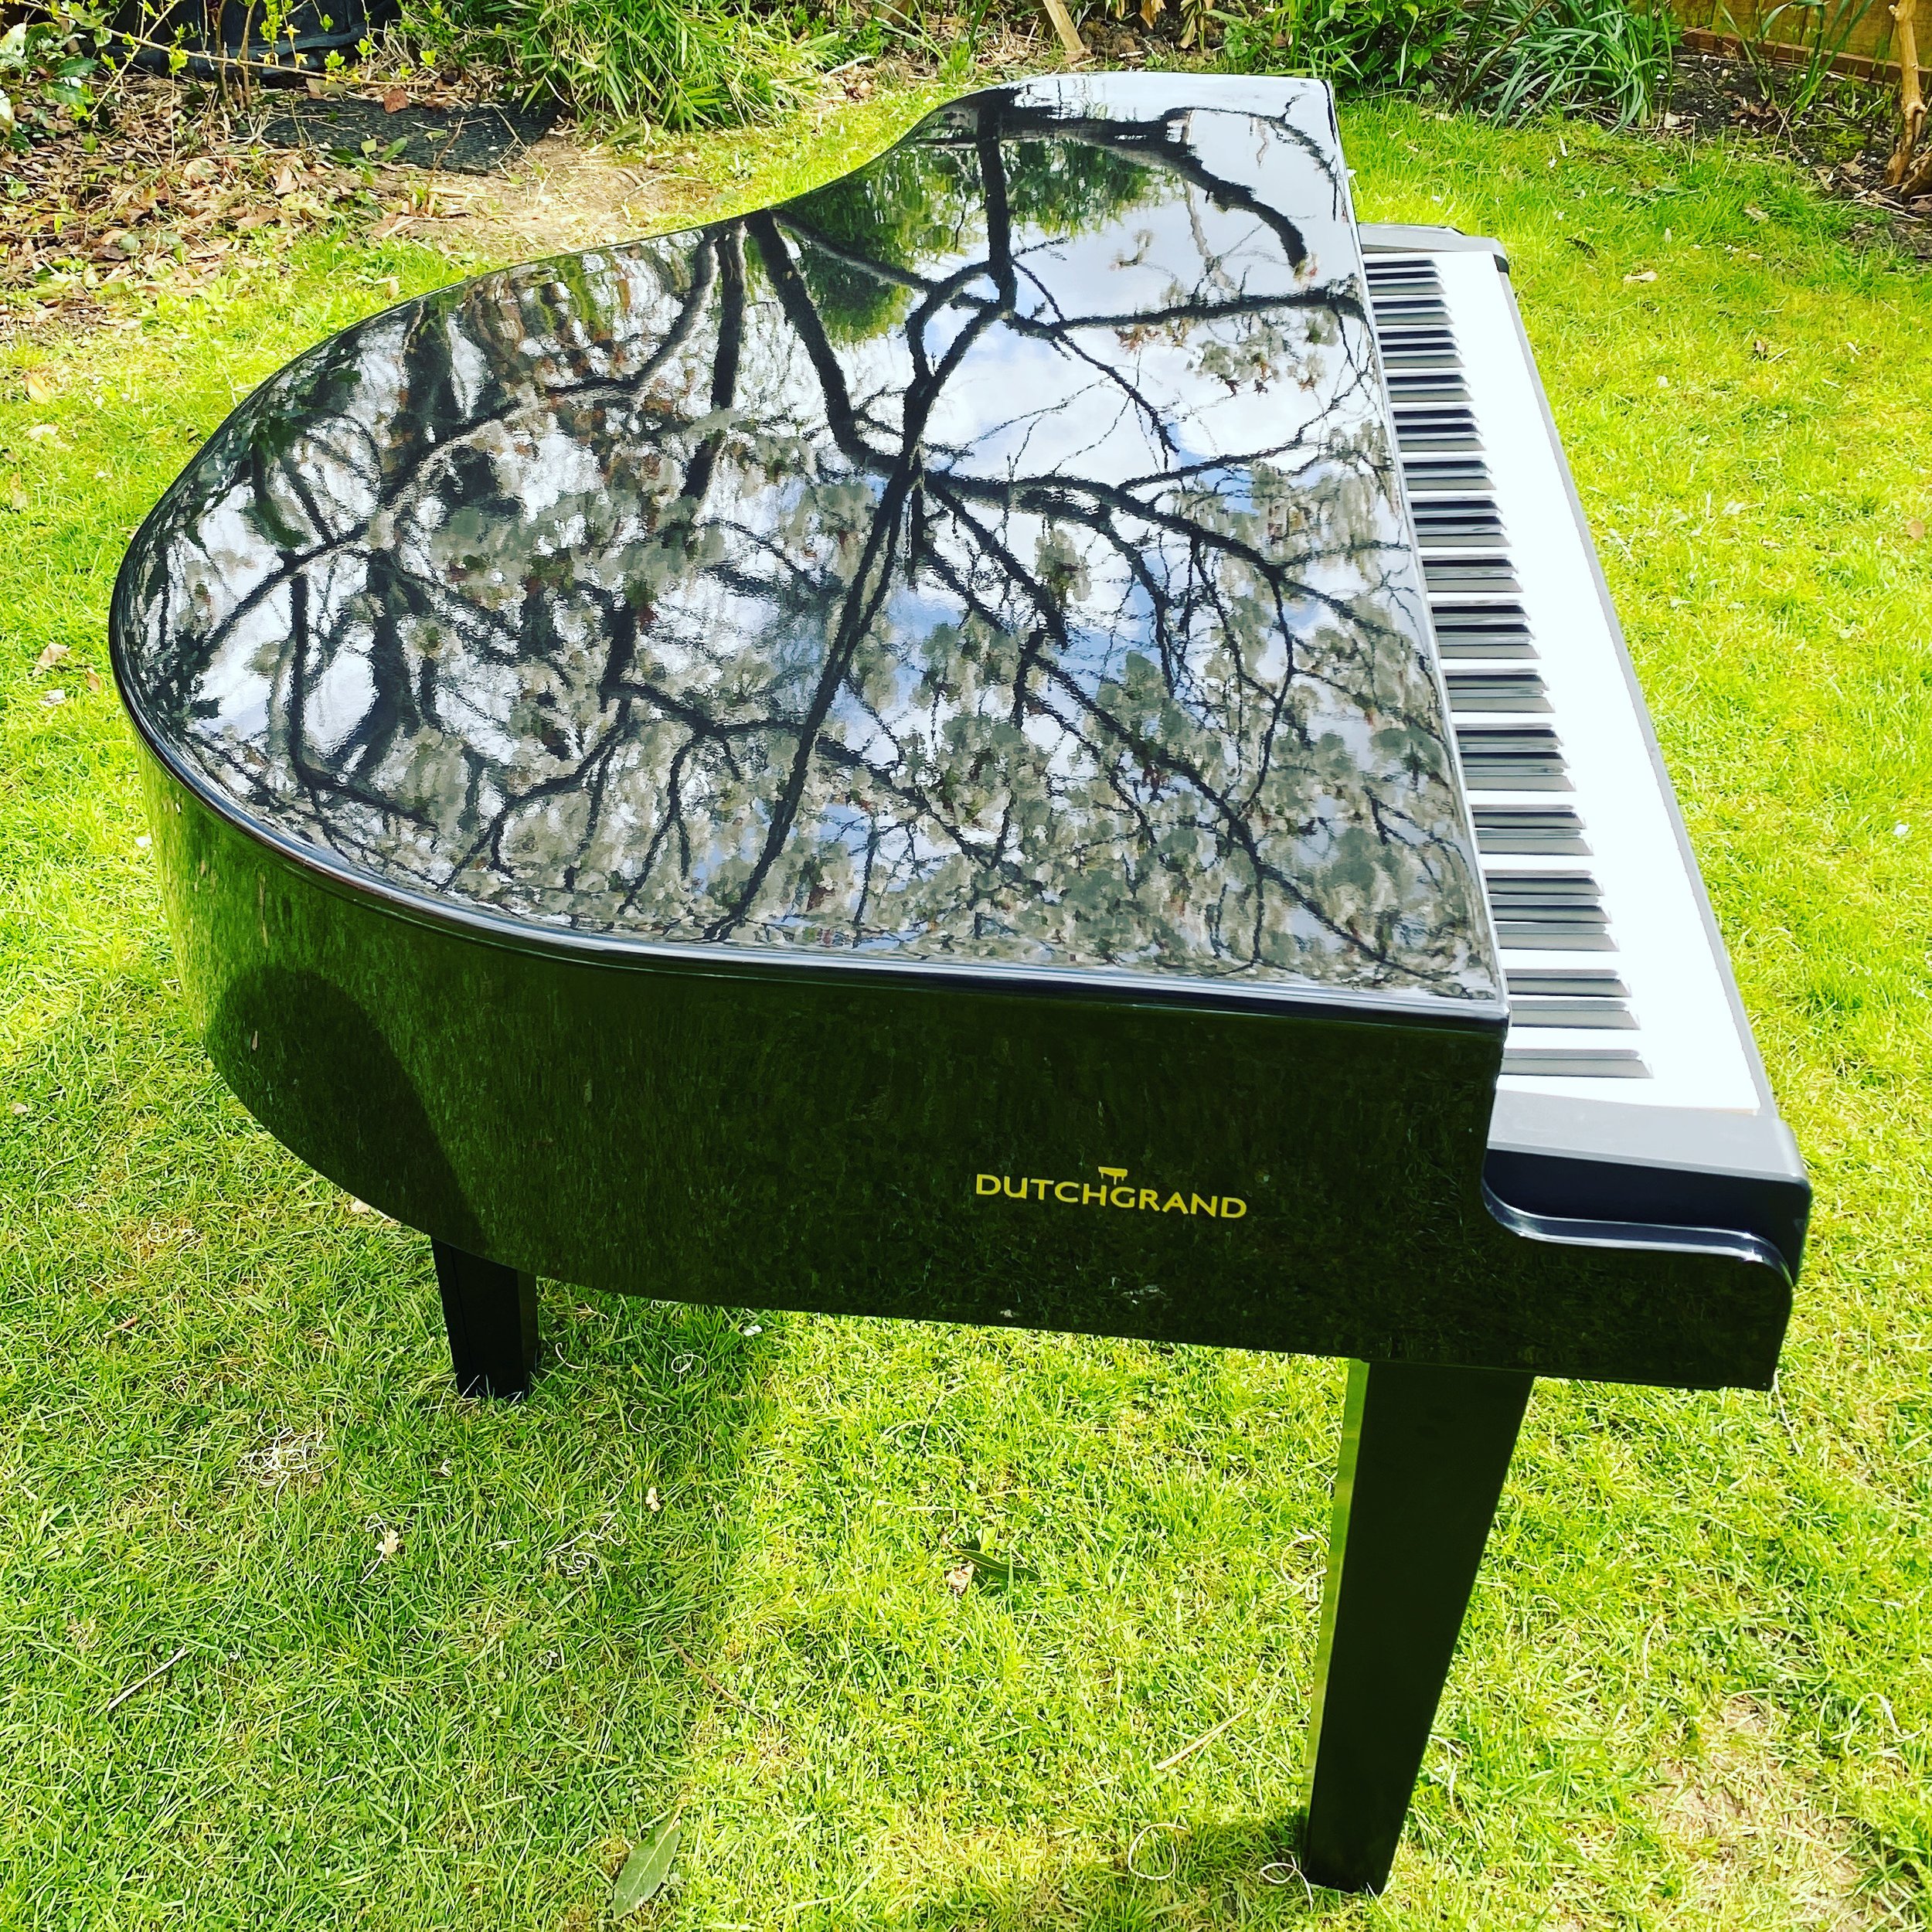 Nigel's mobile baby grand piano